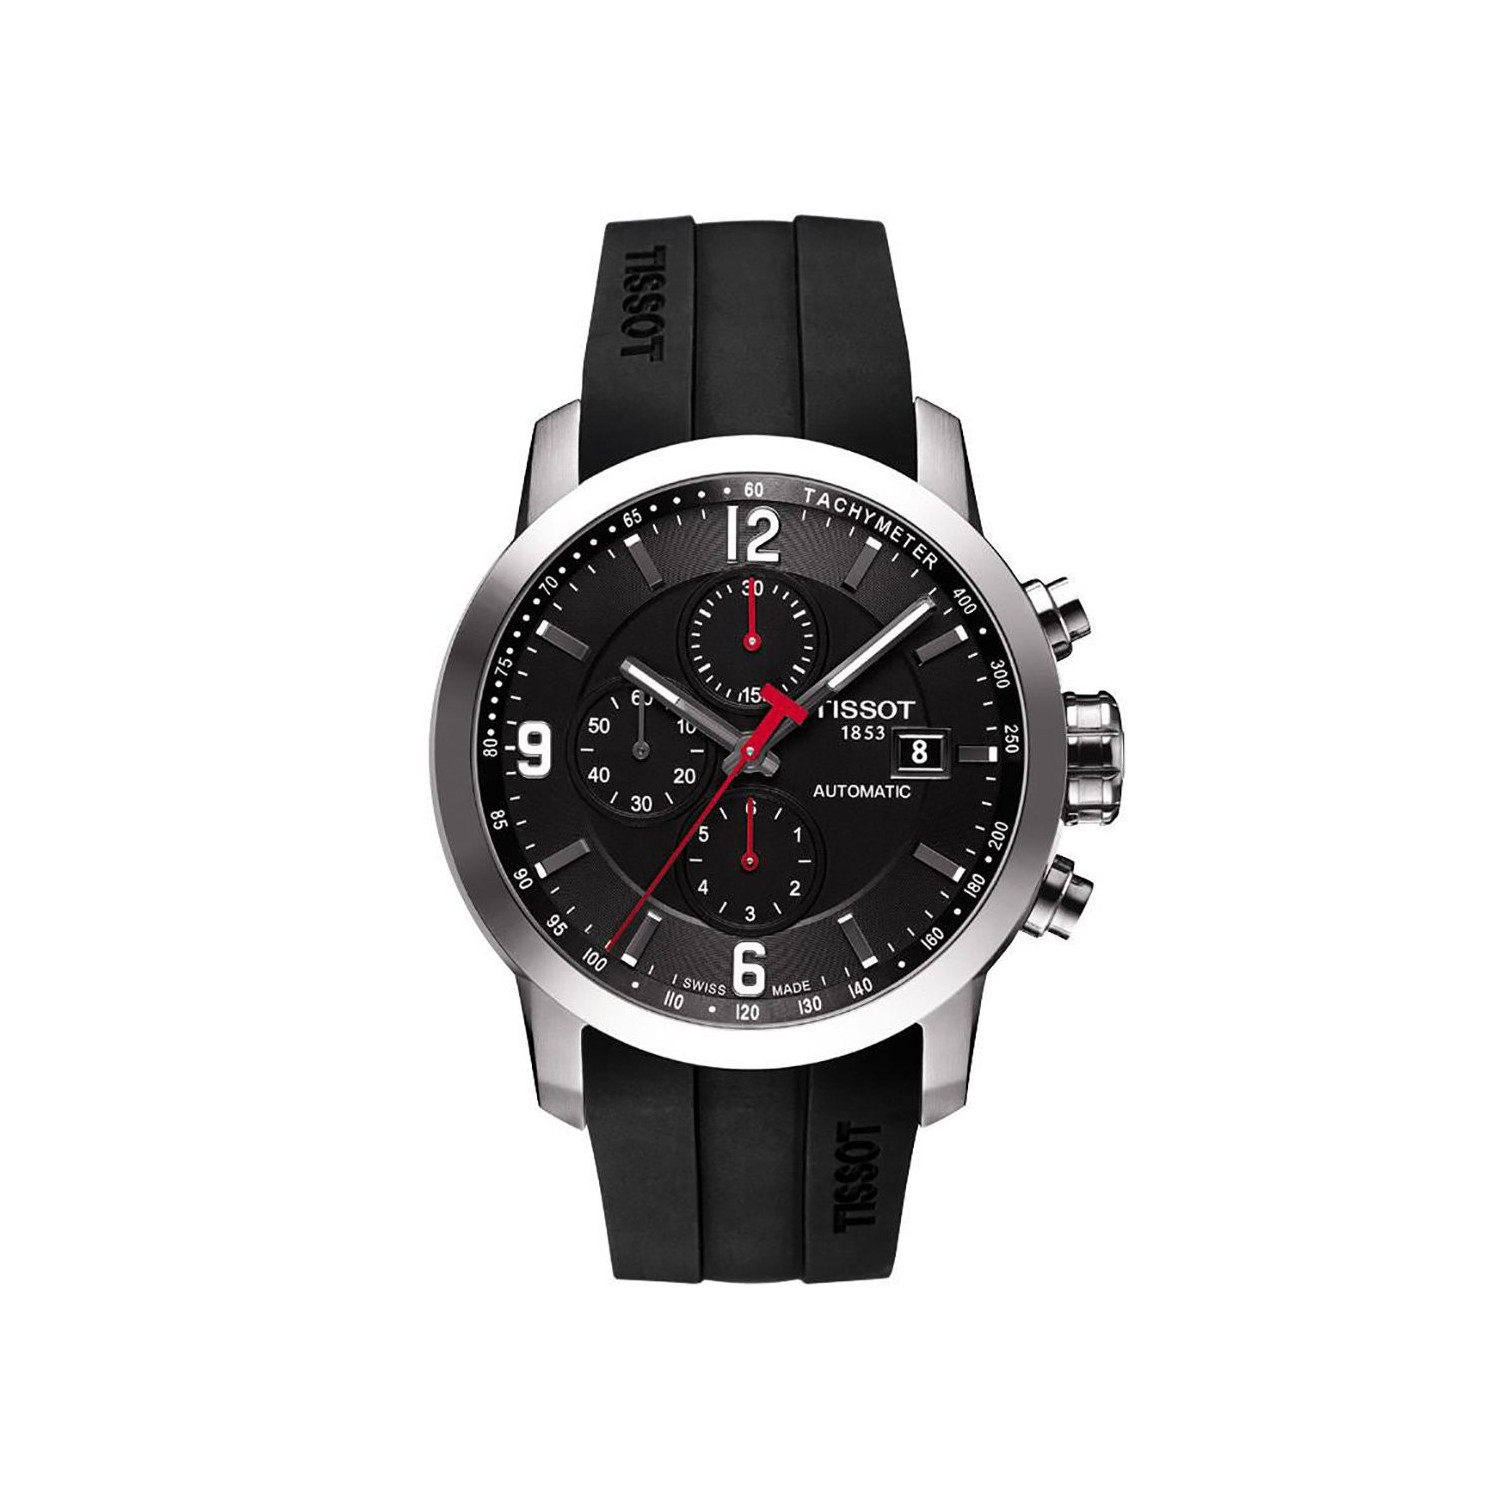 Montre Tissot PRC 200 automatic chronographe